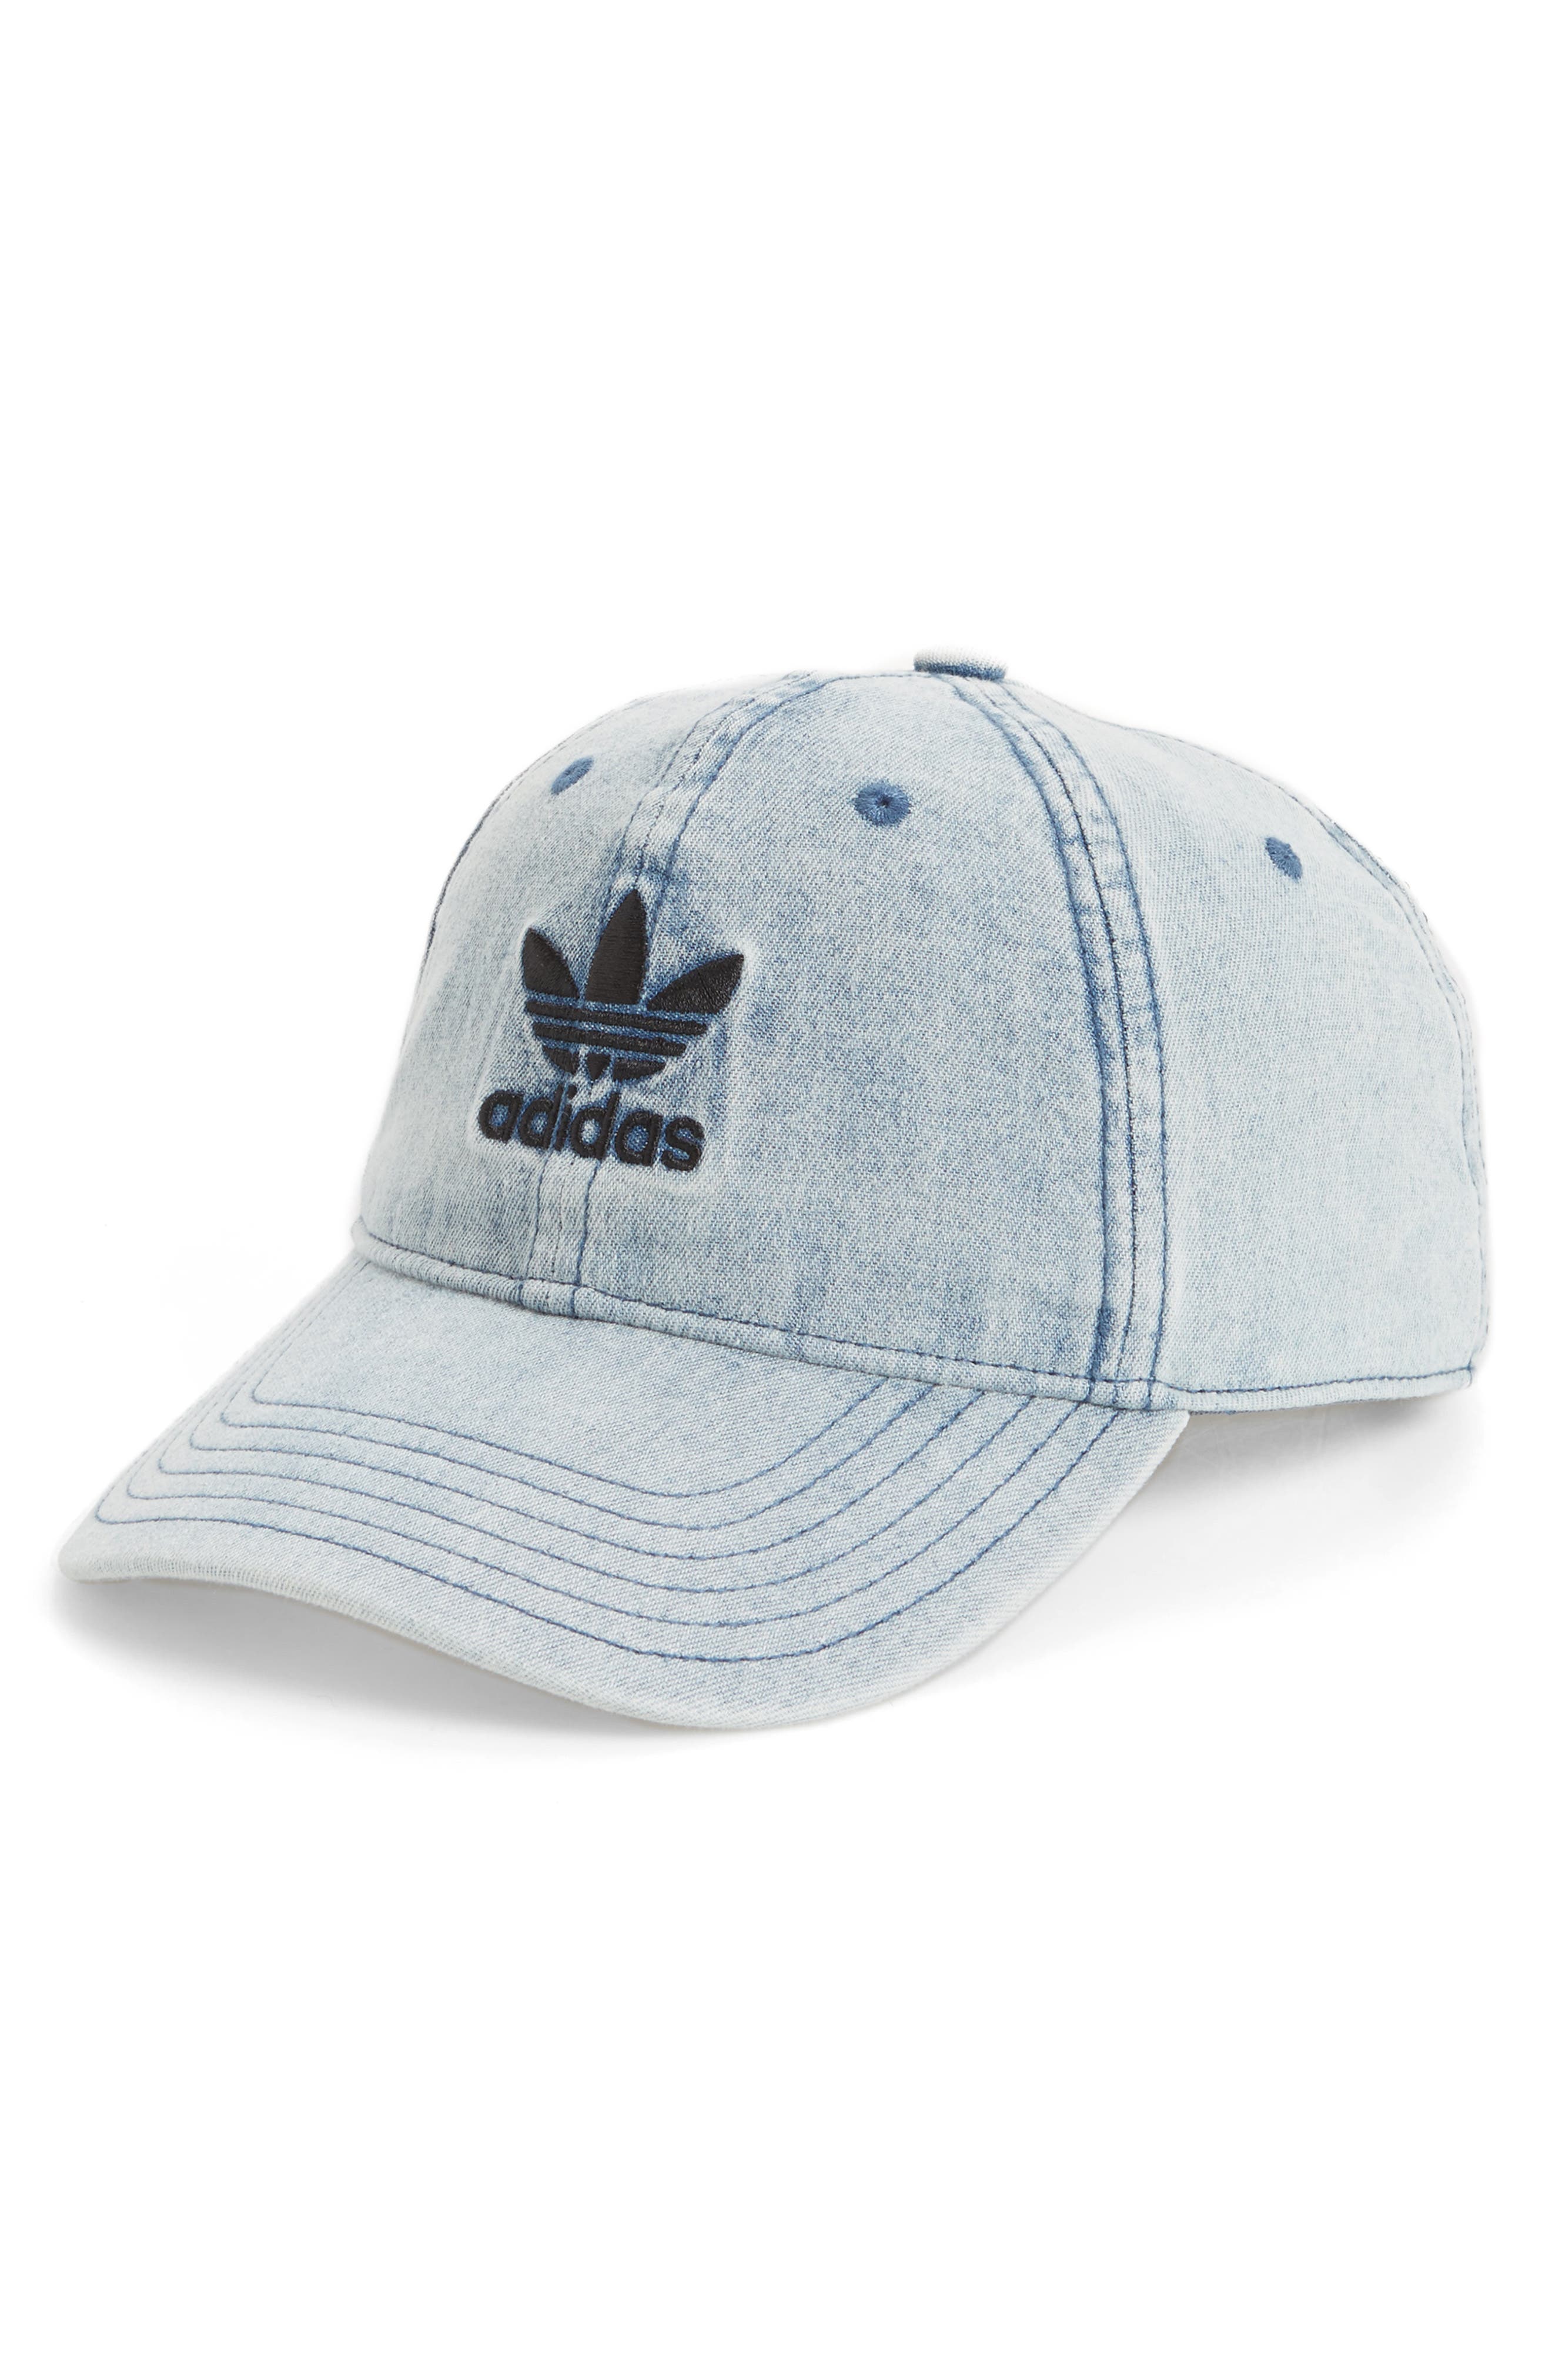 blue jean adidas hat